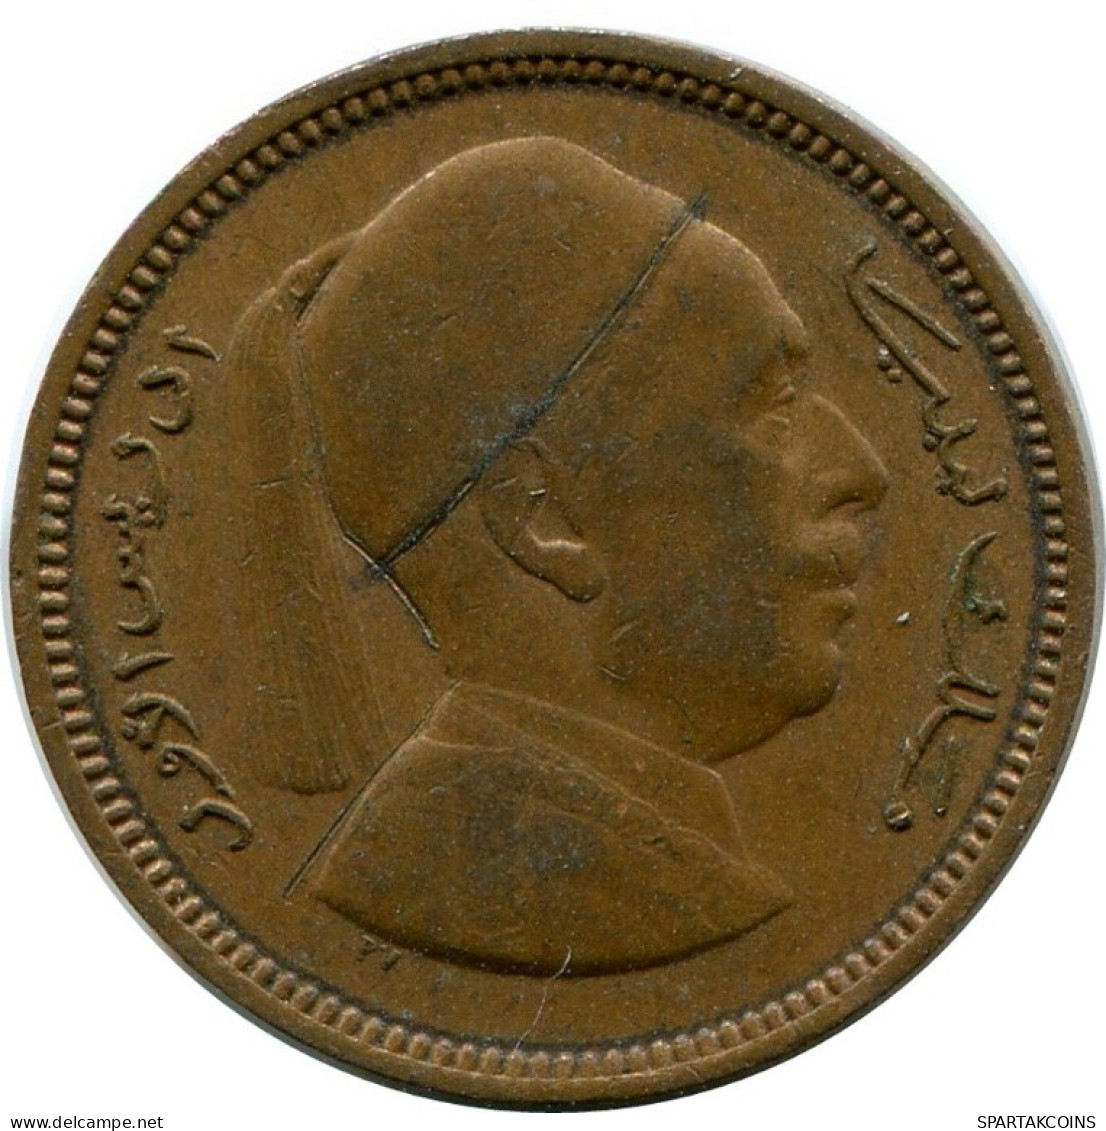 1 MILLIEME 1952 LIBYA Coin #AK328.U.A - Libia